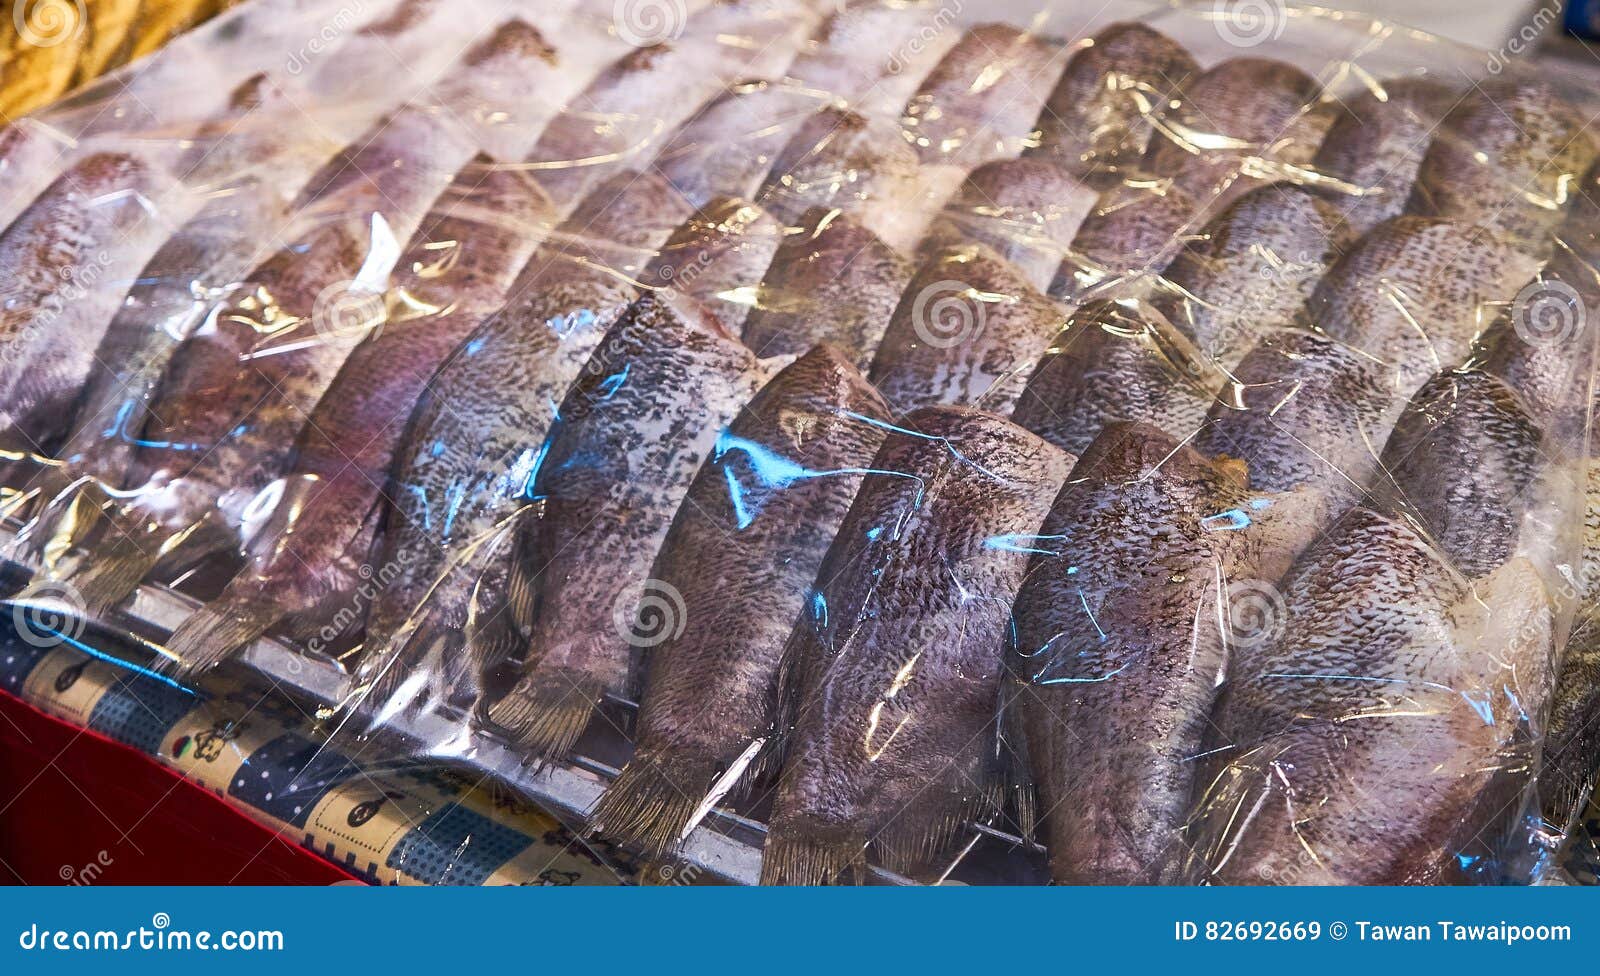 Sundried Fish In Market Bangkok Thailand Stock Image